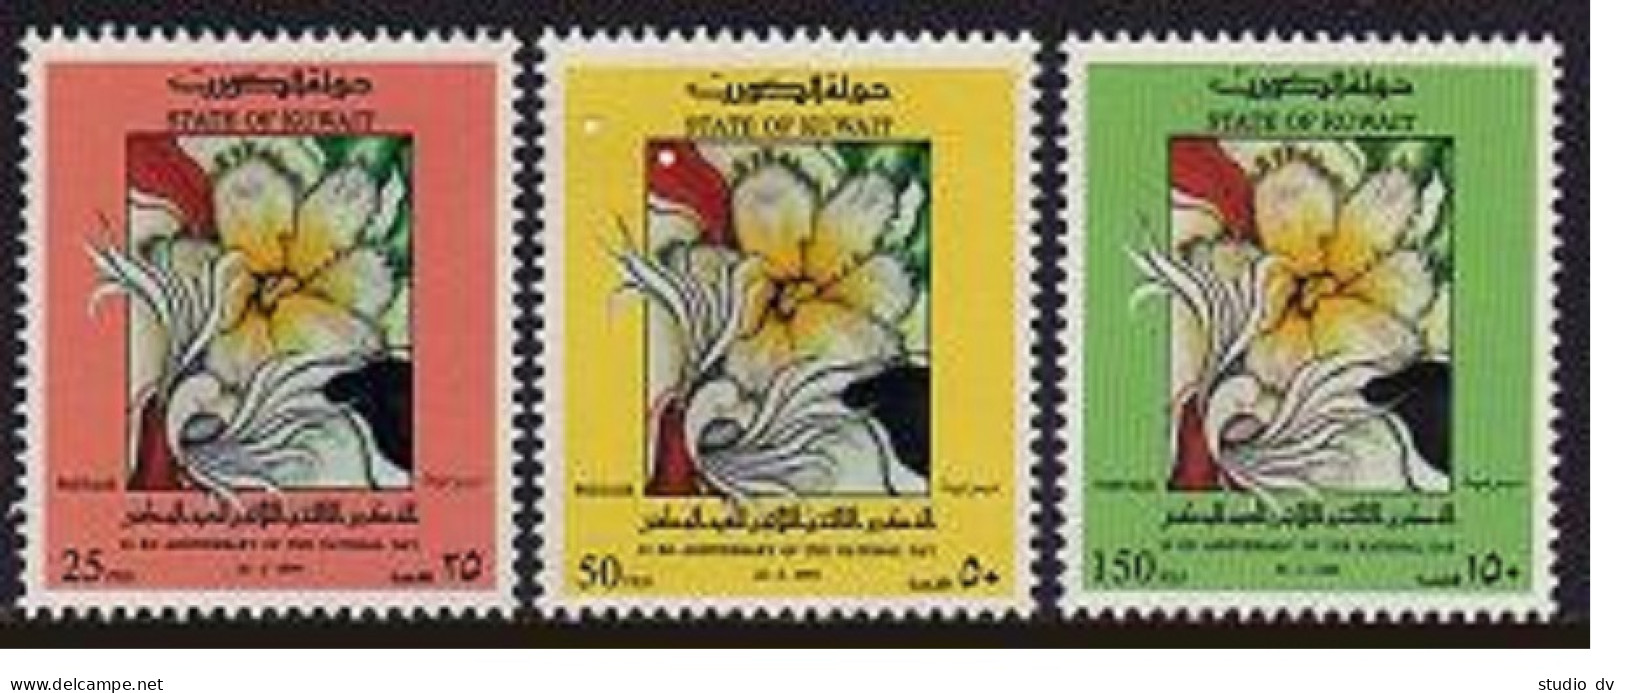 Kuwait 1225-1227, MNH. Michel 1357-1359. 33rd National Day, 1994. Flowers. - Koweït